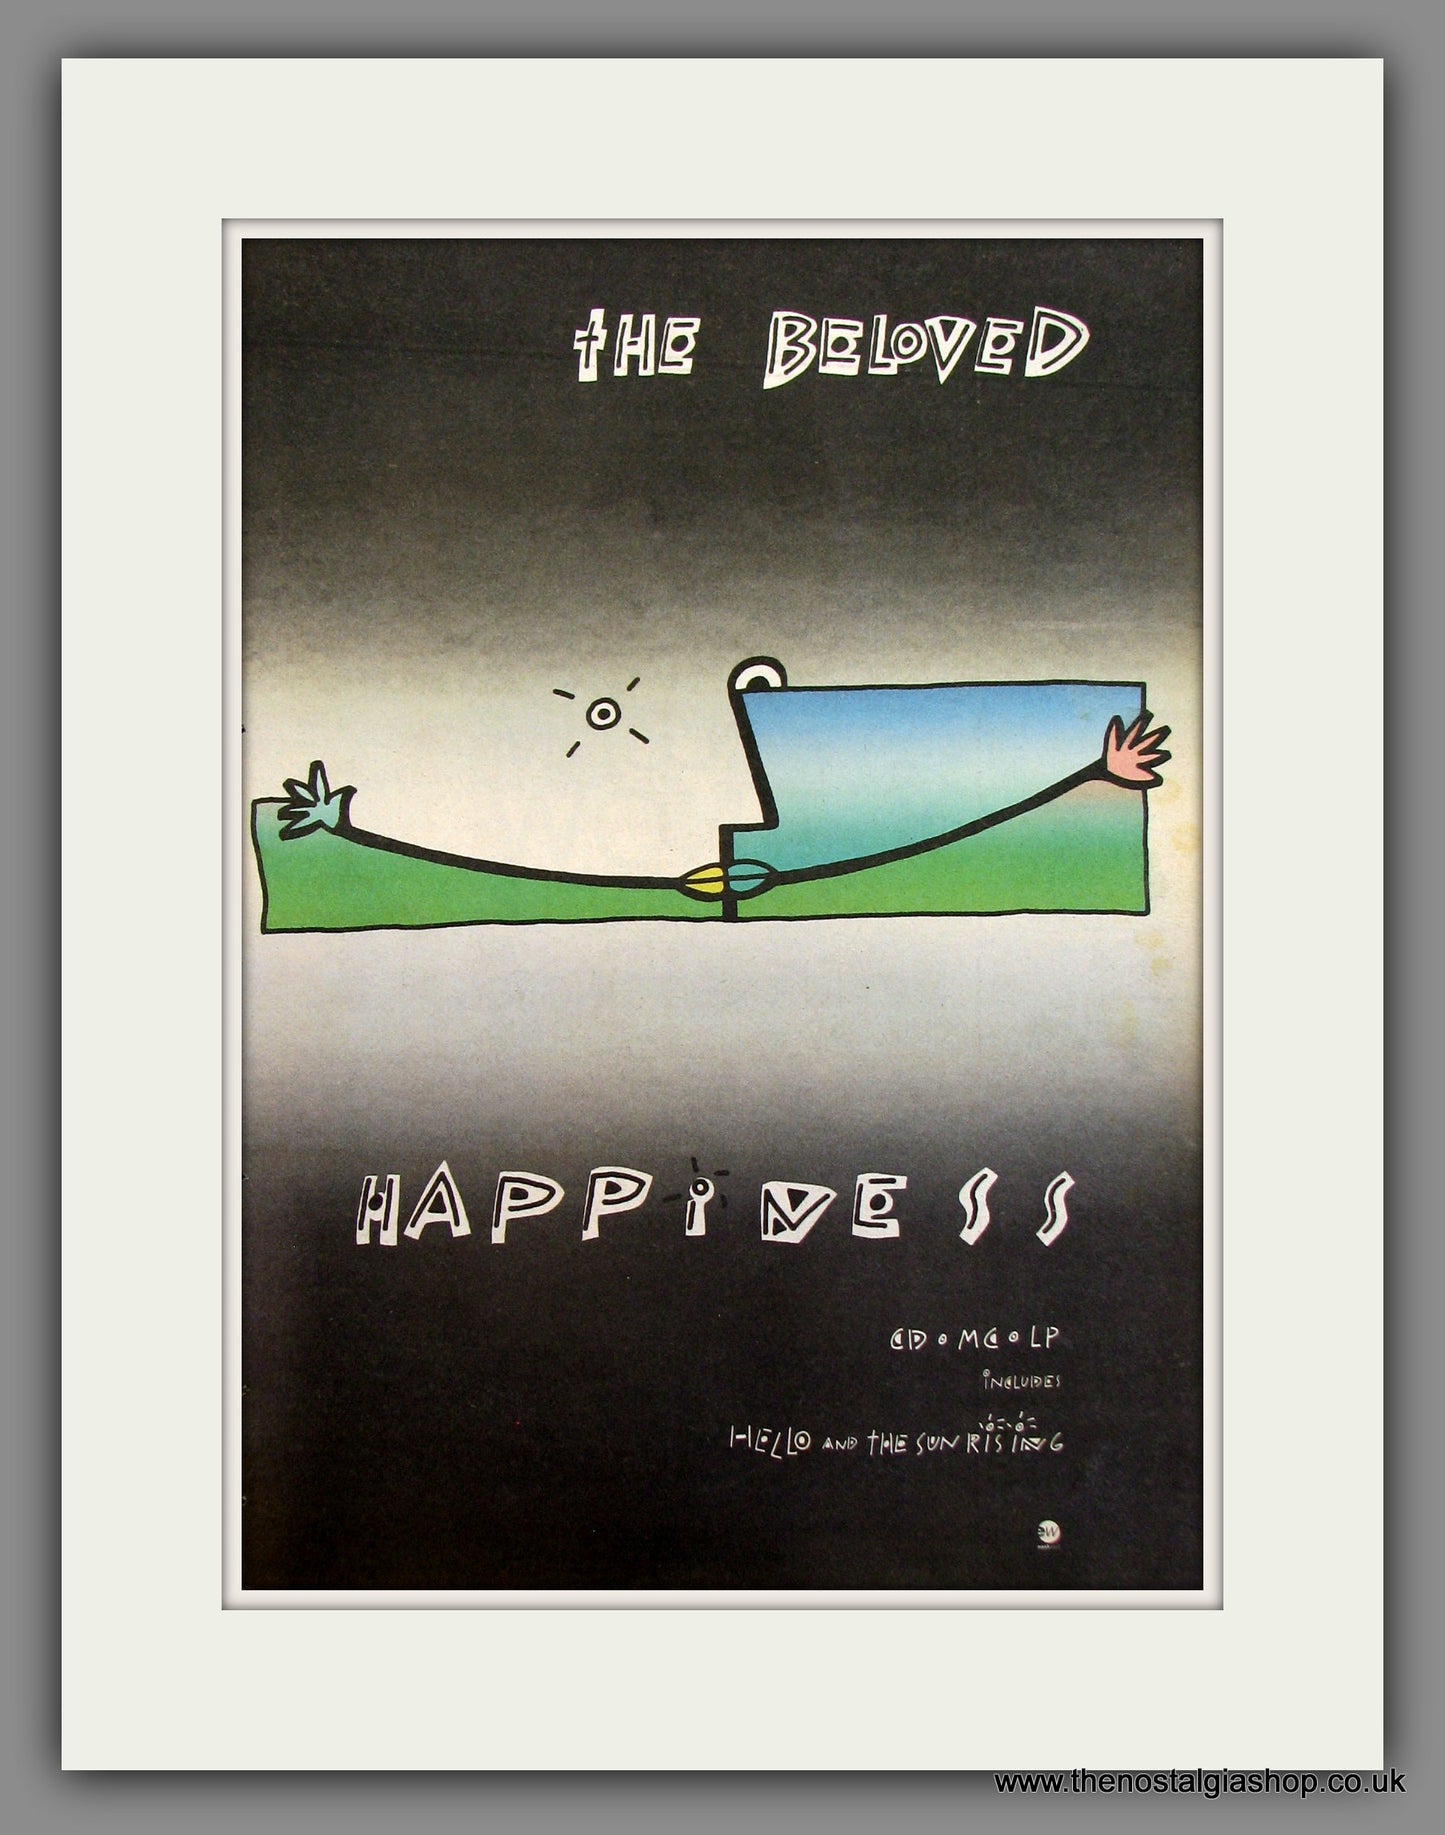 The Beloved, Happiness. Original Advert 1990 (ref AD11683)